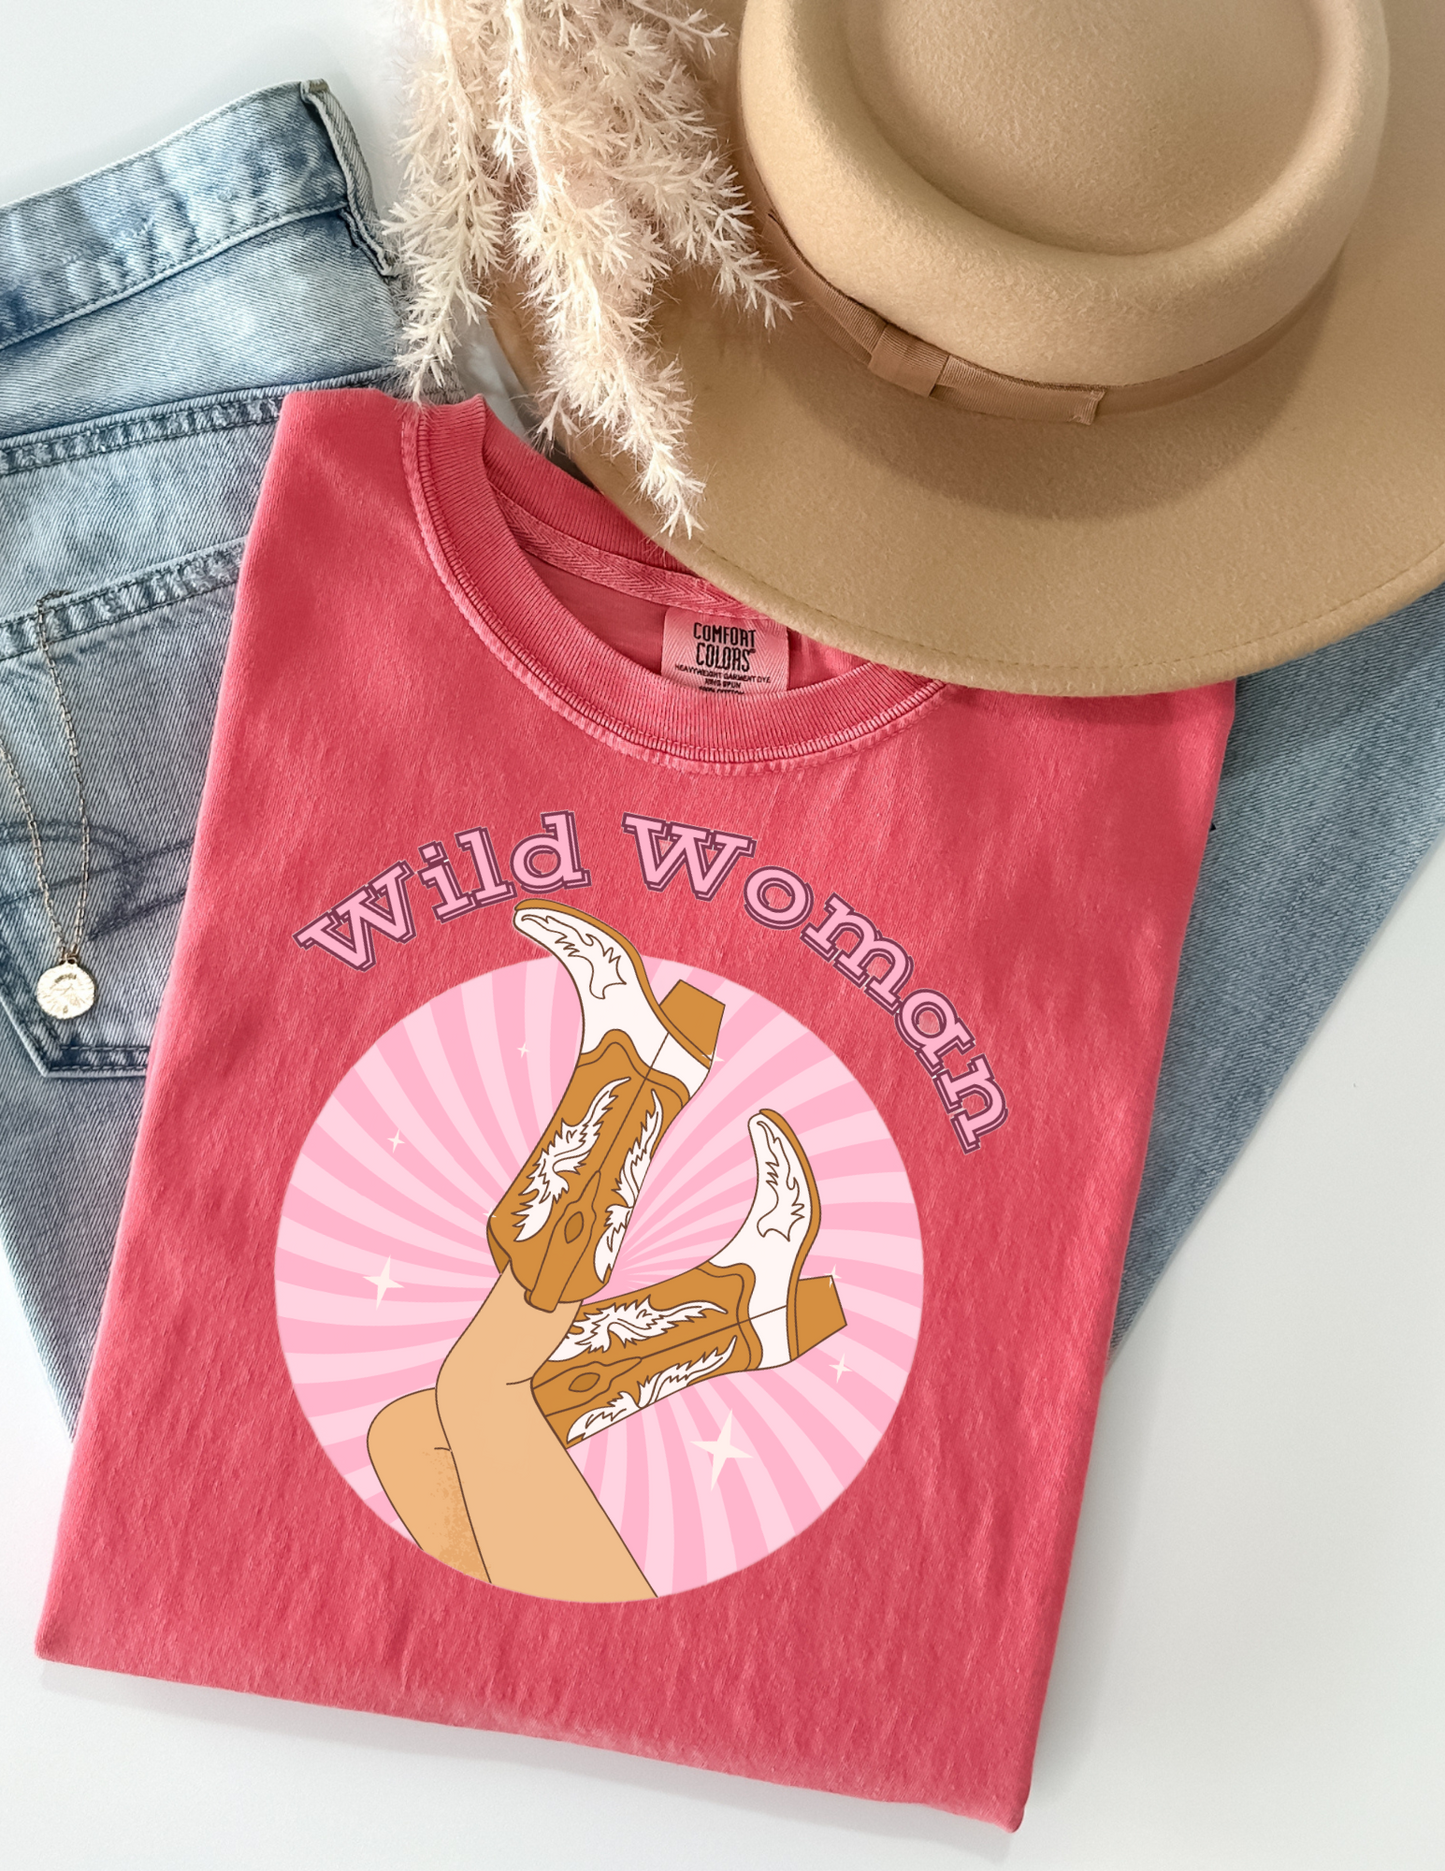 "Wild Woman" Graphic Tee